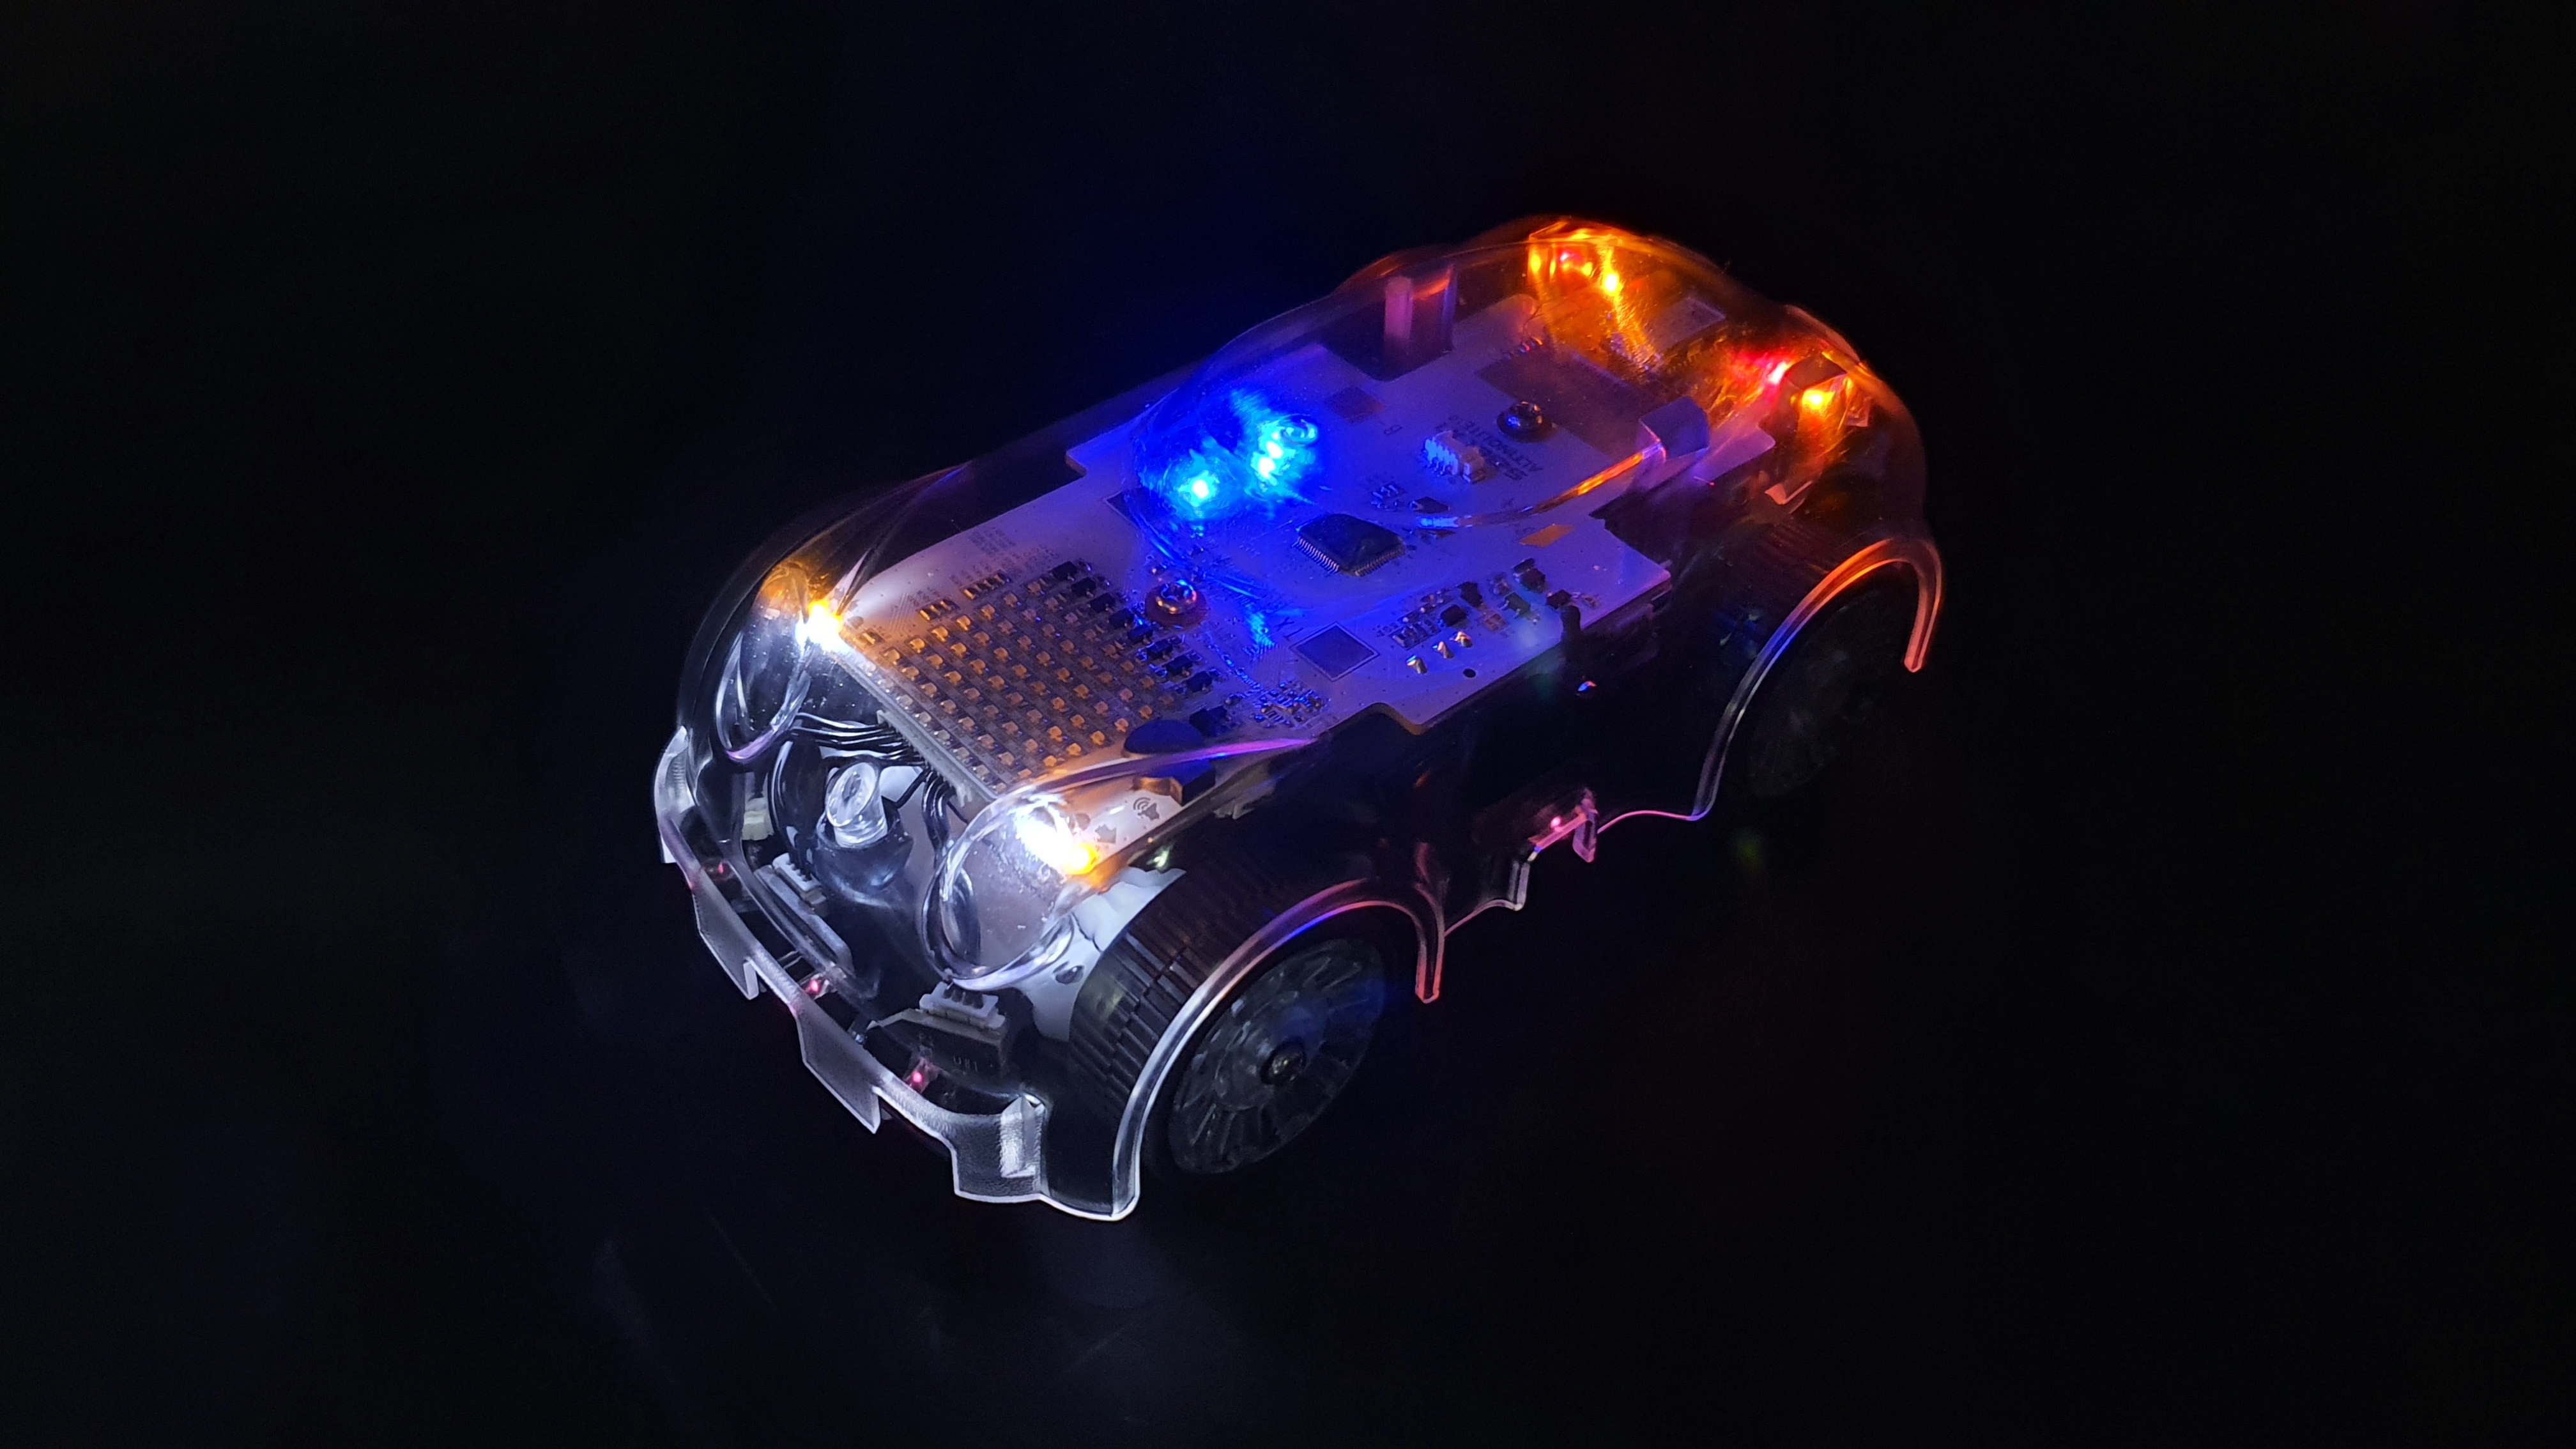 XIAOKEKE 원격 제어 로봇 장난감 - 적외선 컨트롤러가 있는 충전식 프로그램-11번가 모바일